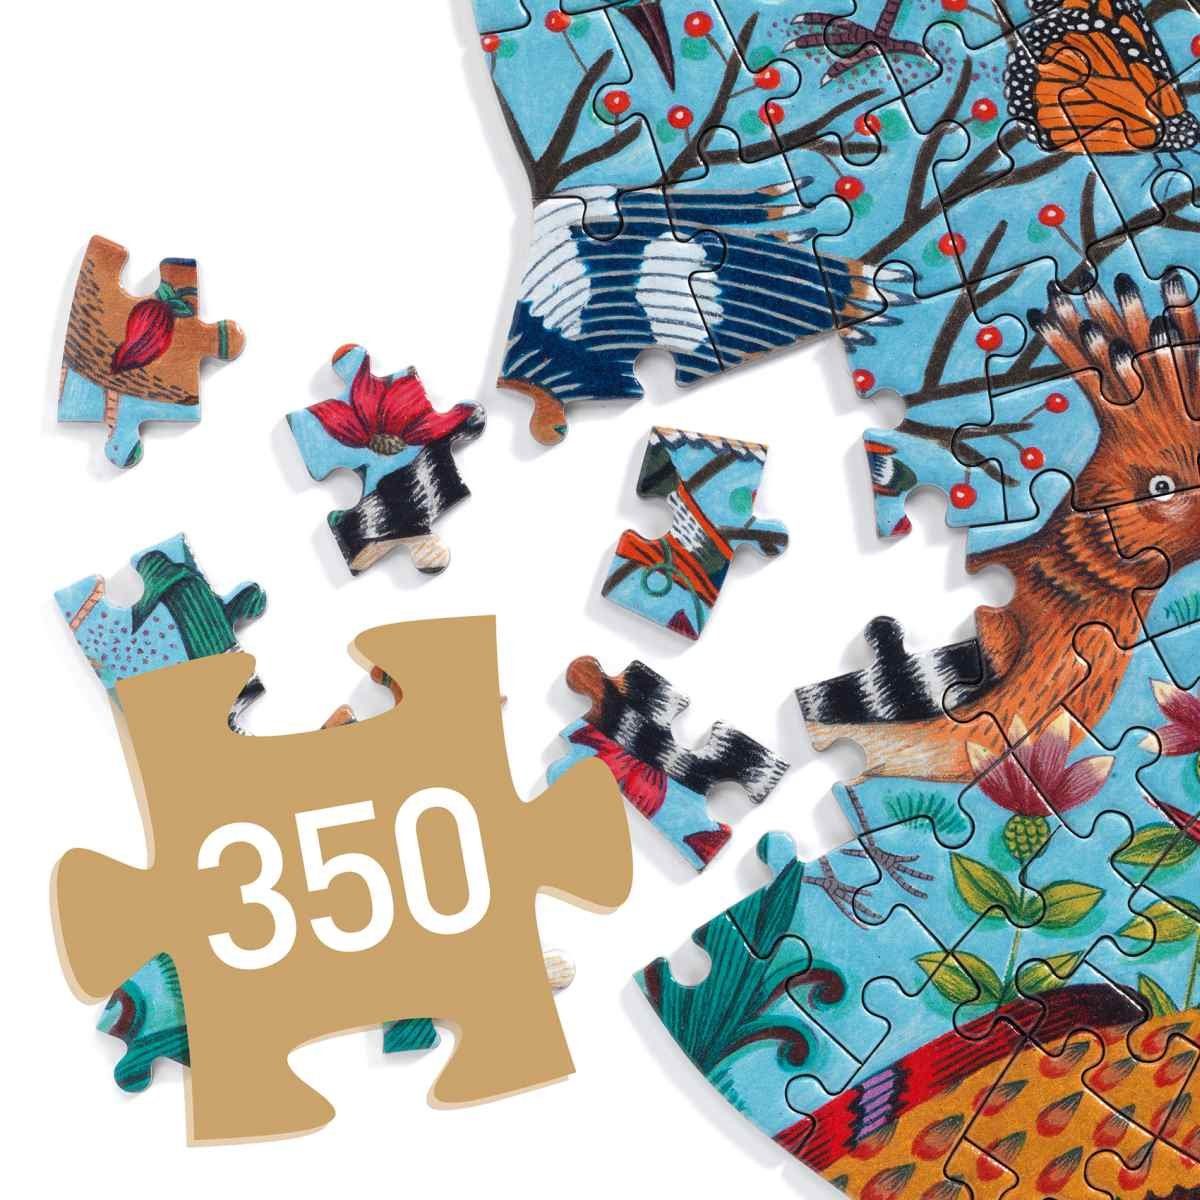 Tiere DJECO Konturenpuzzle Puzz'Art 350 Puzzleteile Teile Tiermotive,